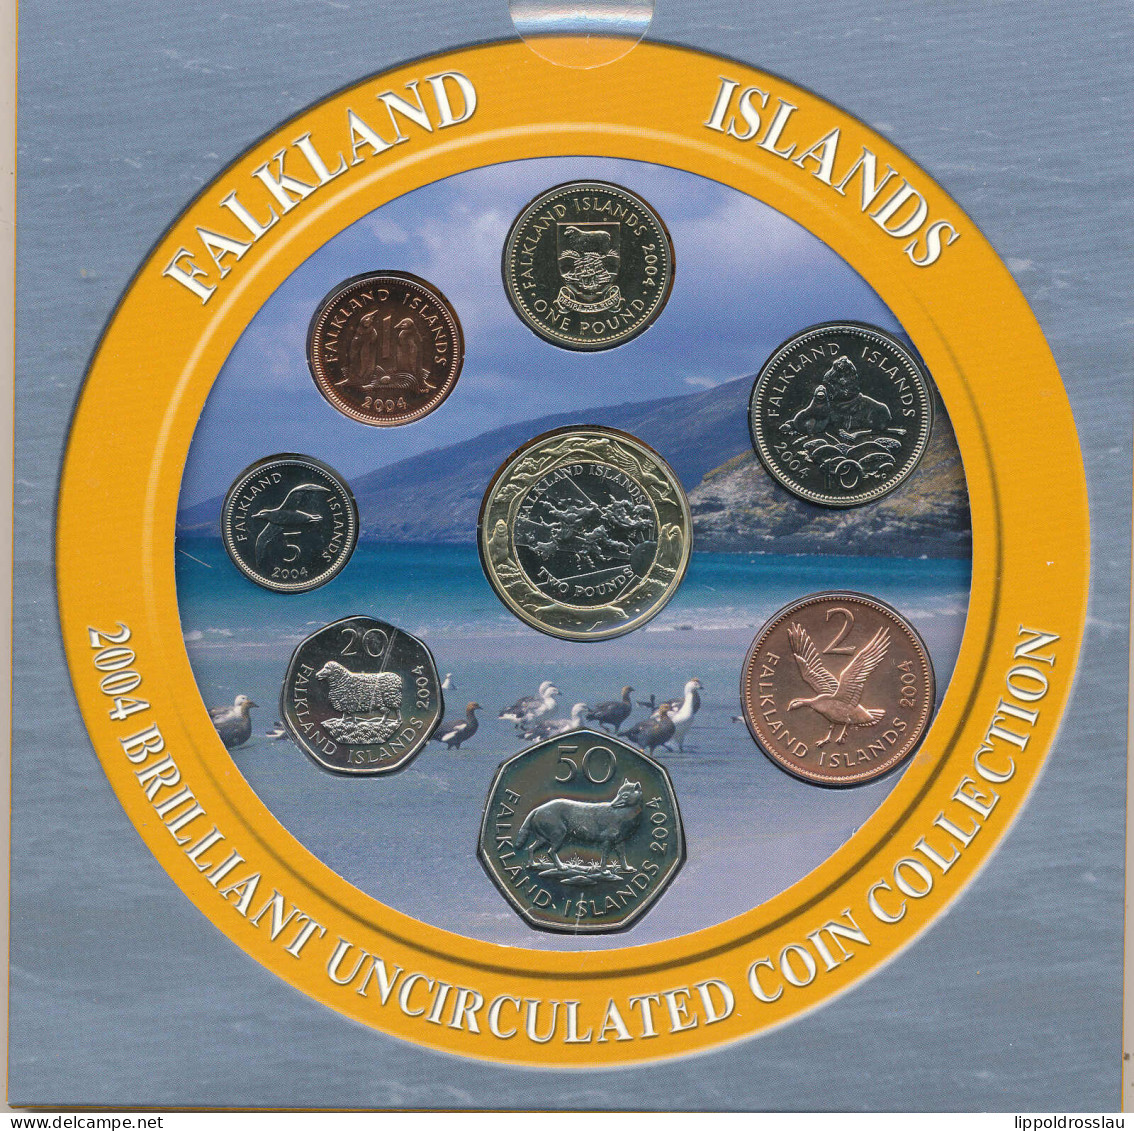 FALKLANDINSELN 2004 BRILLANT UNZIRKULIERTE MÜNZSAMMLUNG Set 8x Münzen 1 Penny ~ £ 2 Pfund BUNC - Falklandinseln